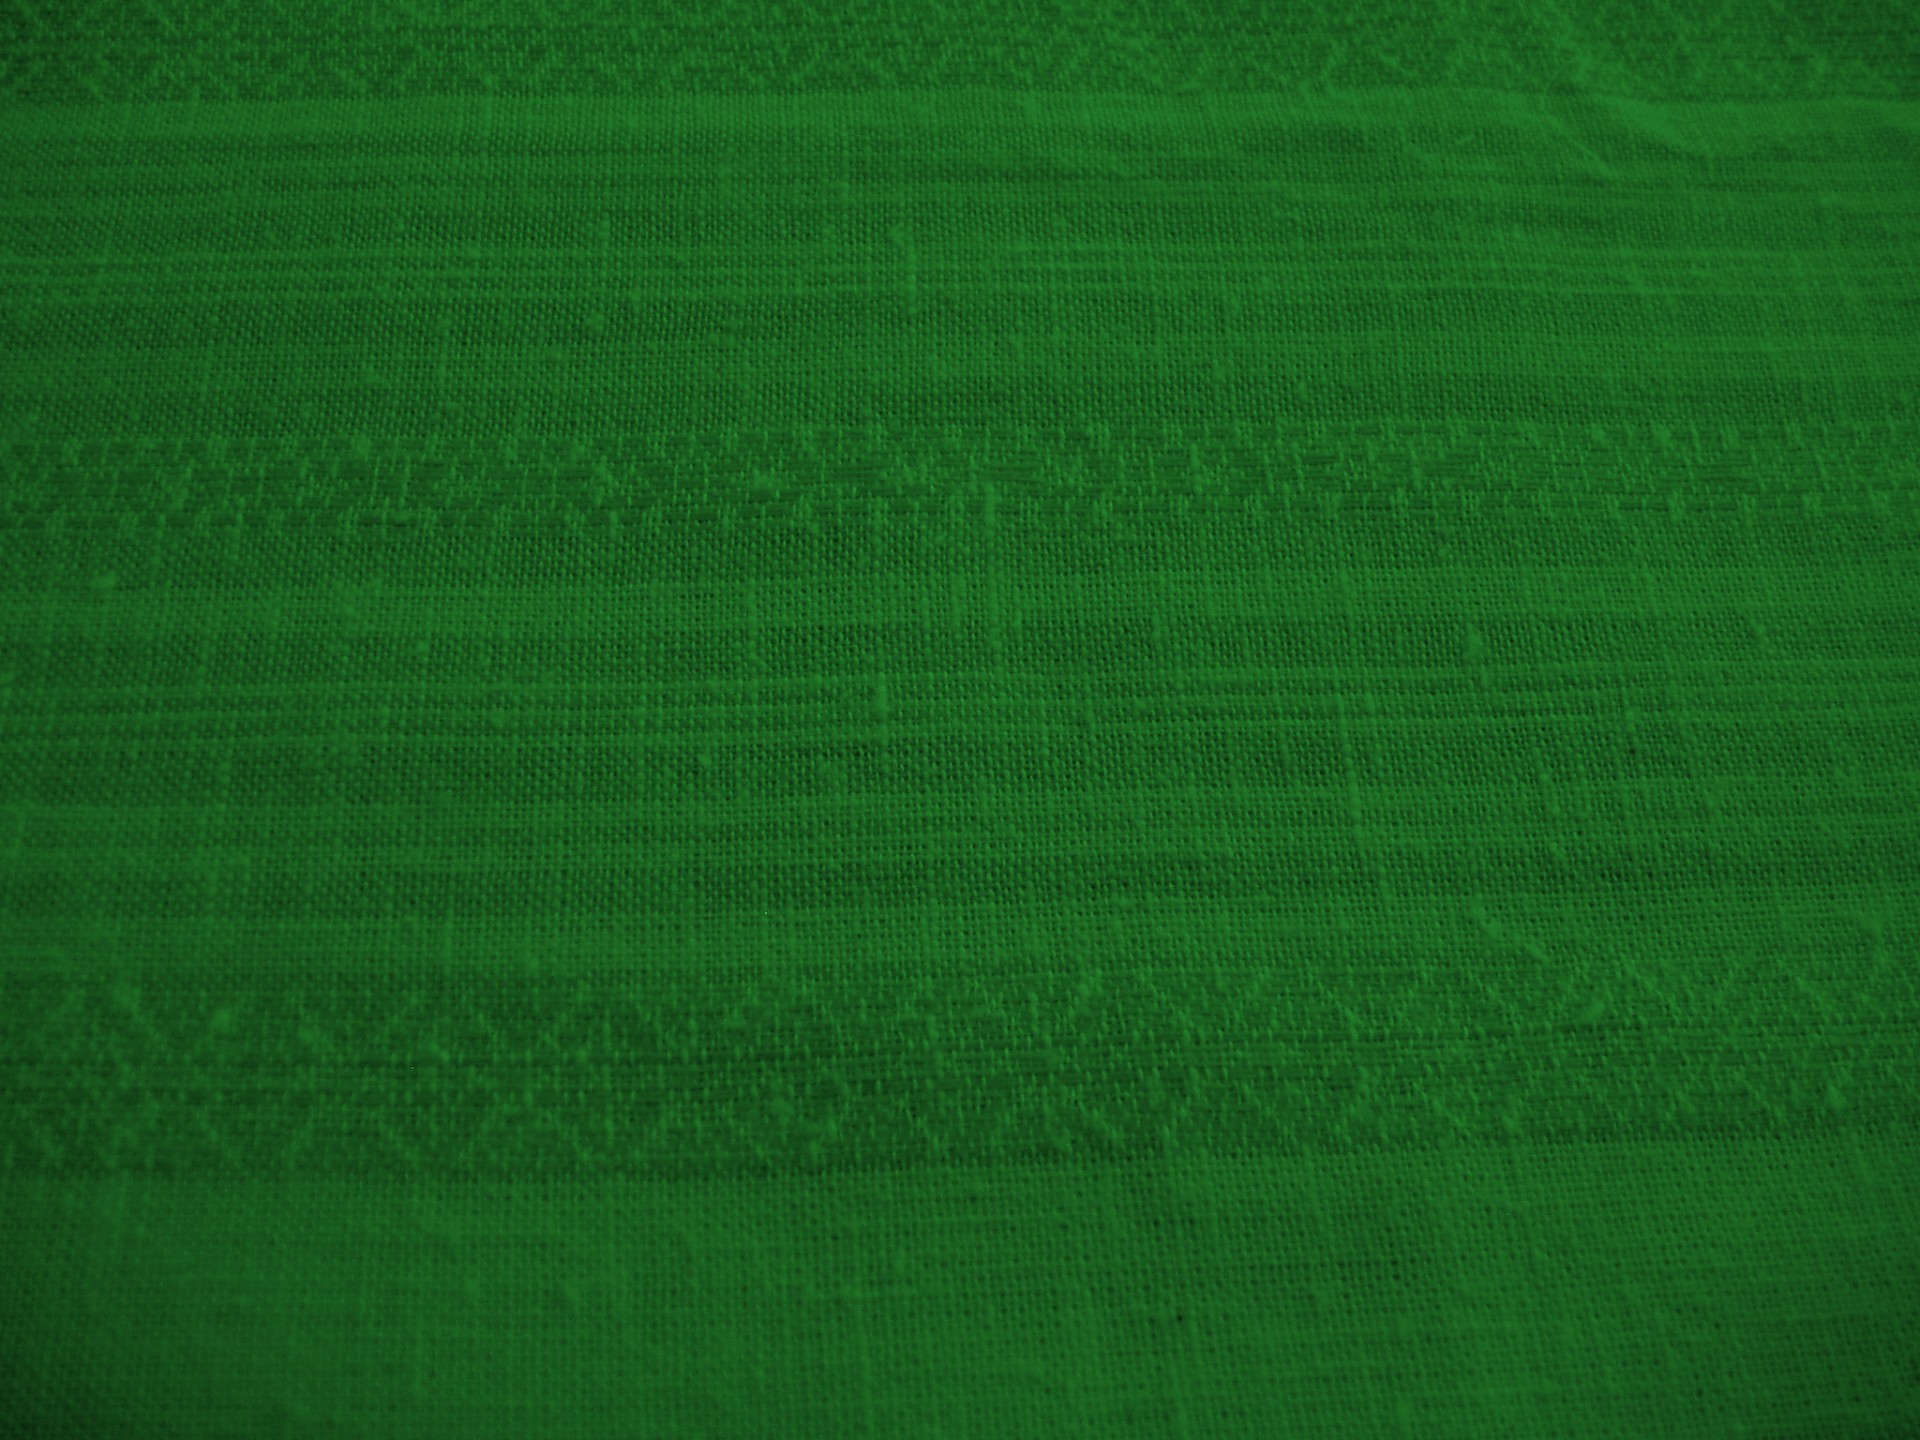 Green lenjerie Textura